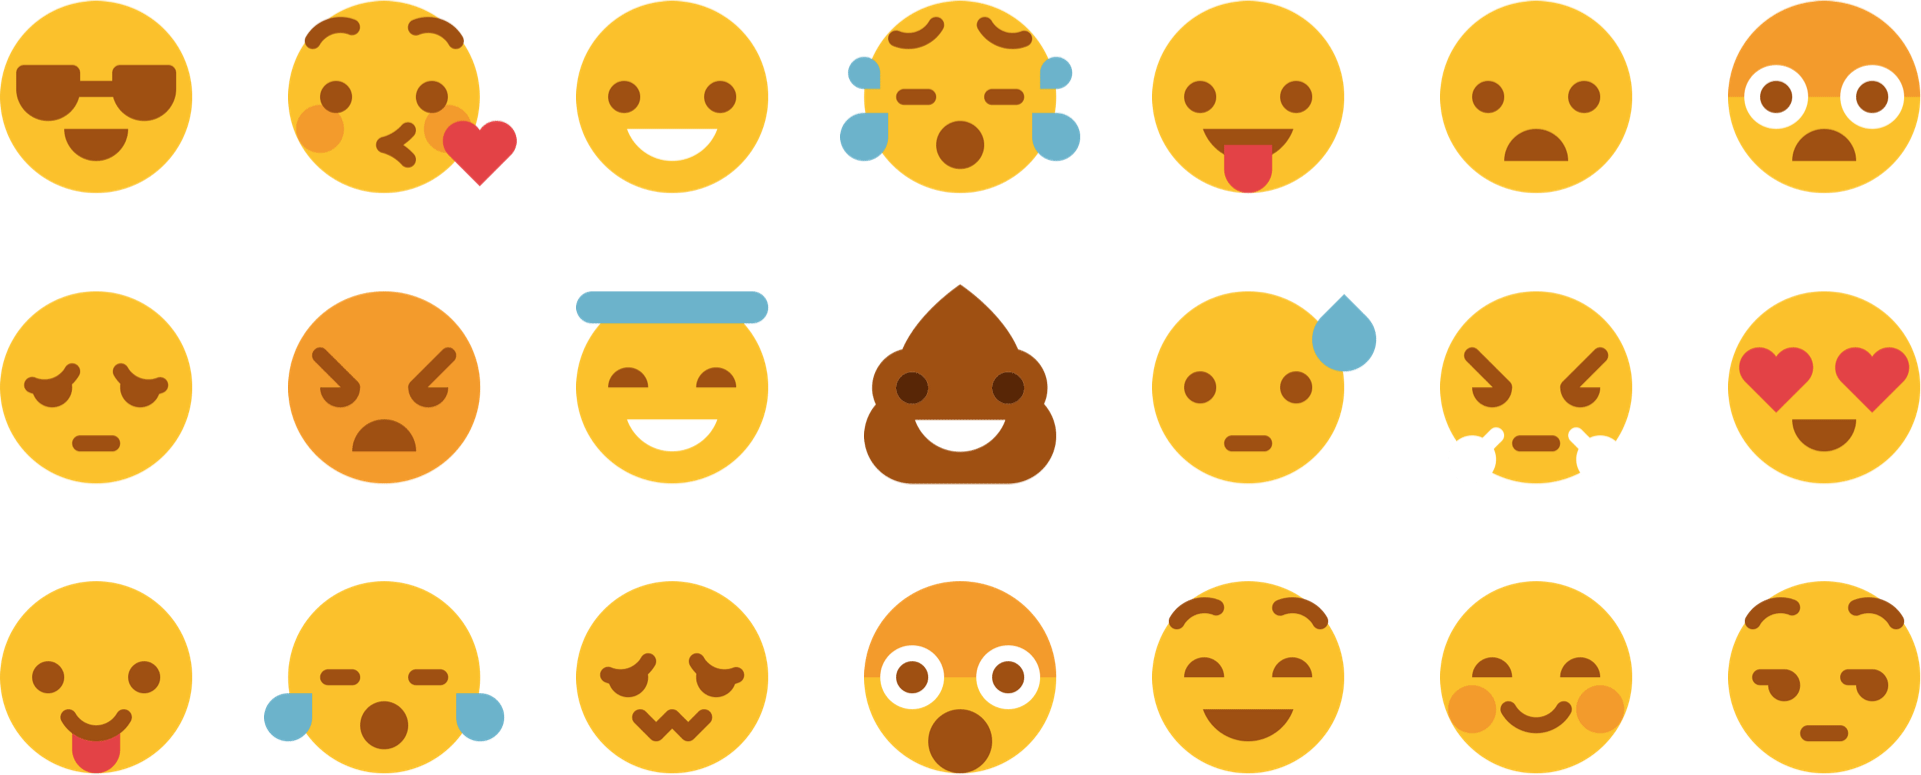 Download Thinking Emoji Icon in PNG | Emoji Island